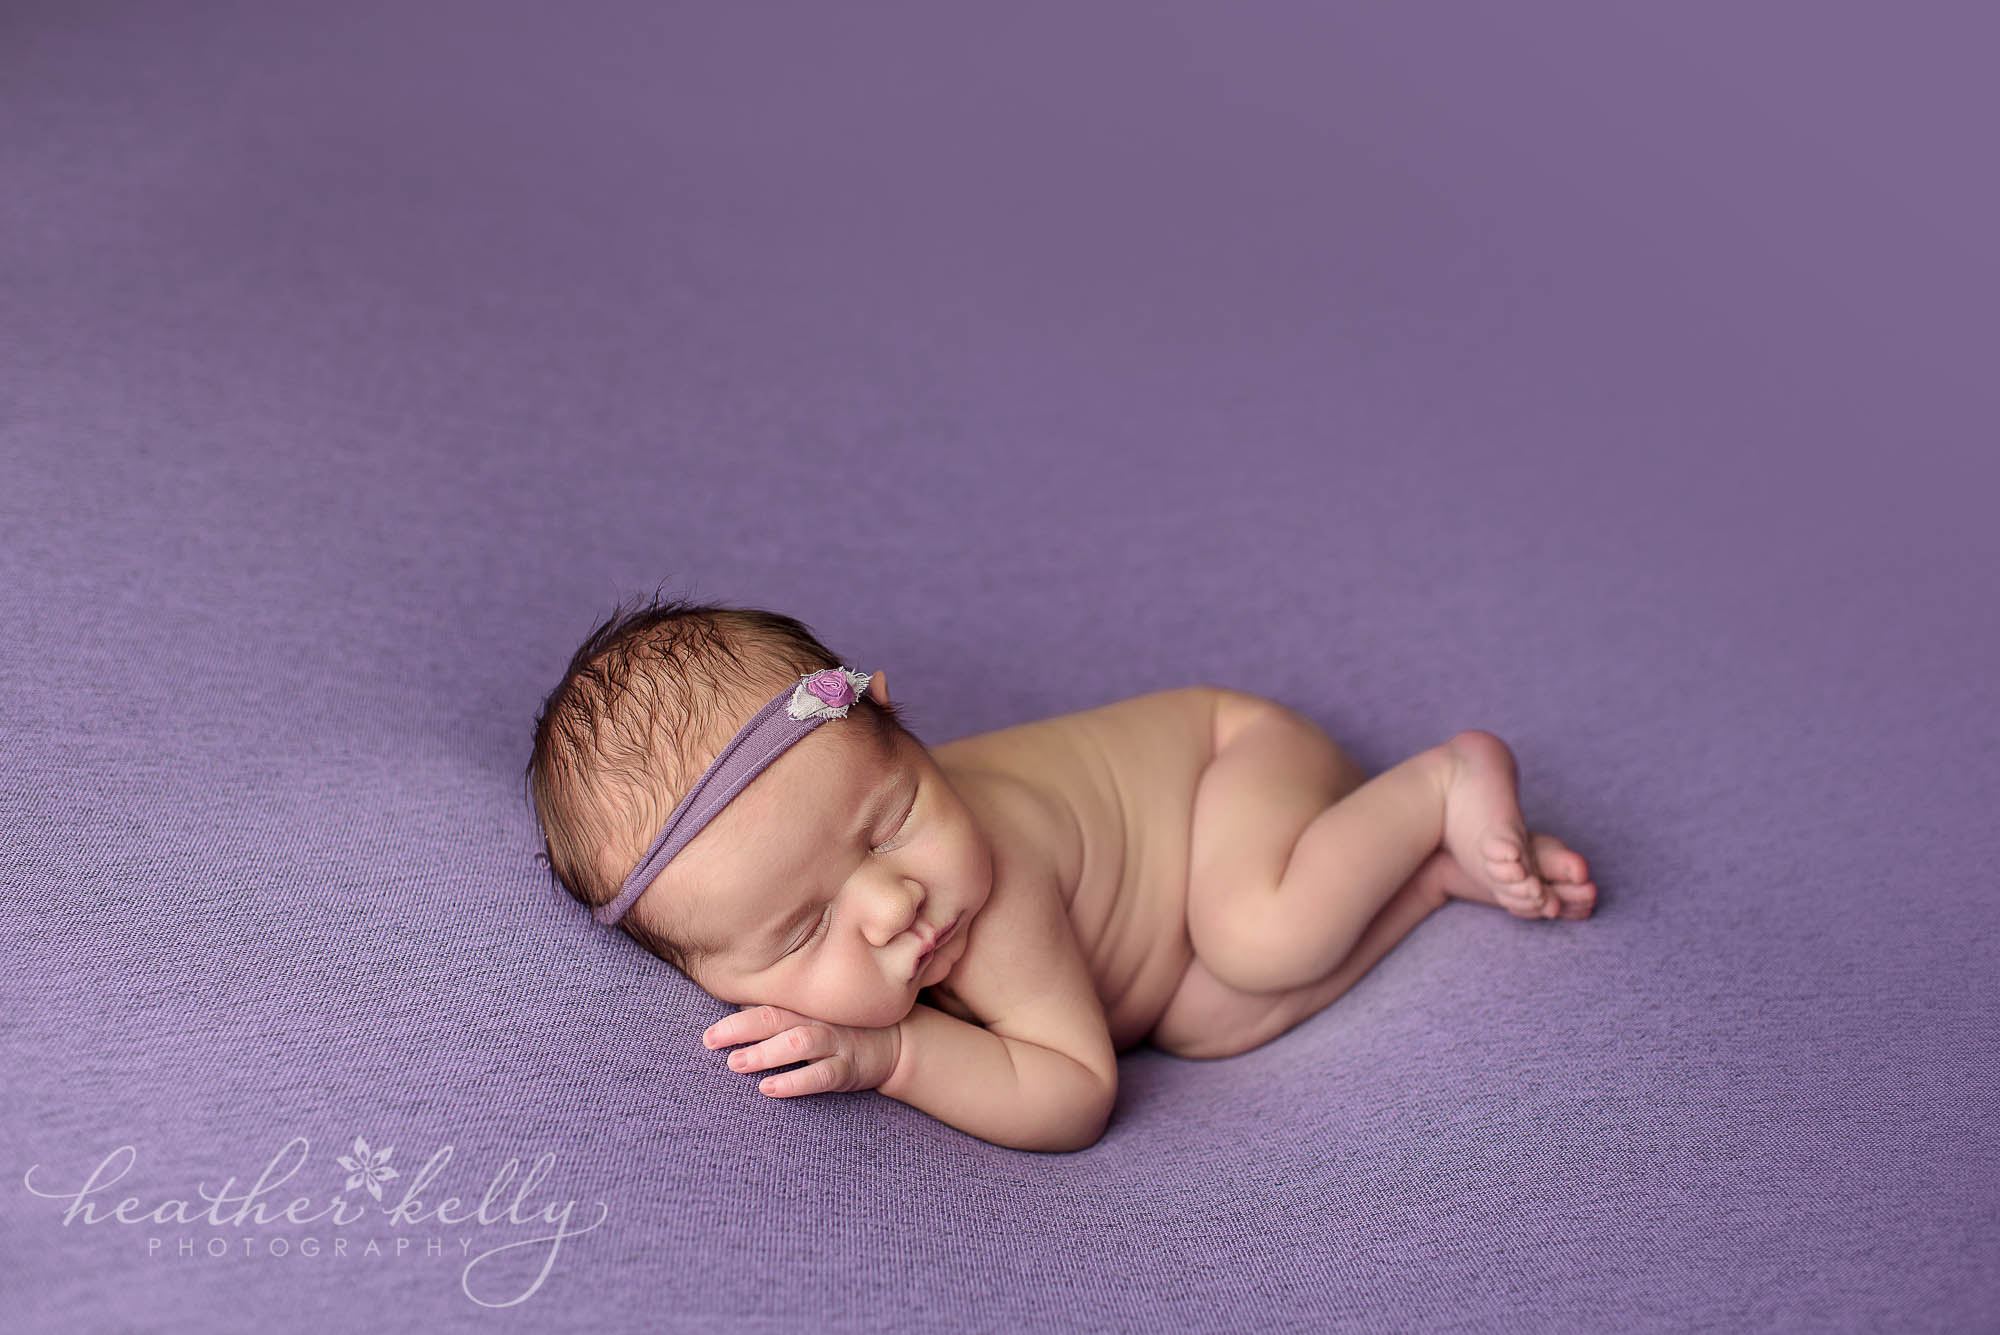 side laying newborn pose. newborn photography norwalk ct